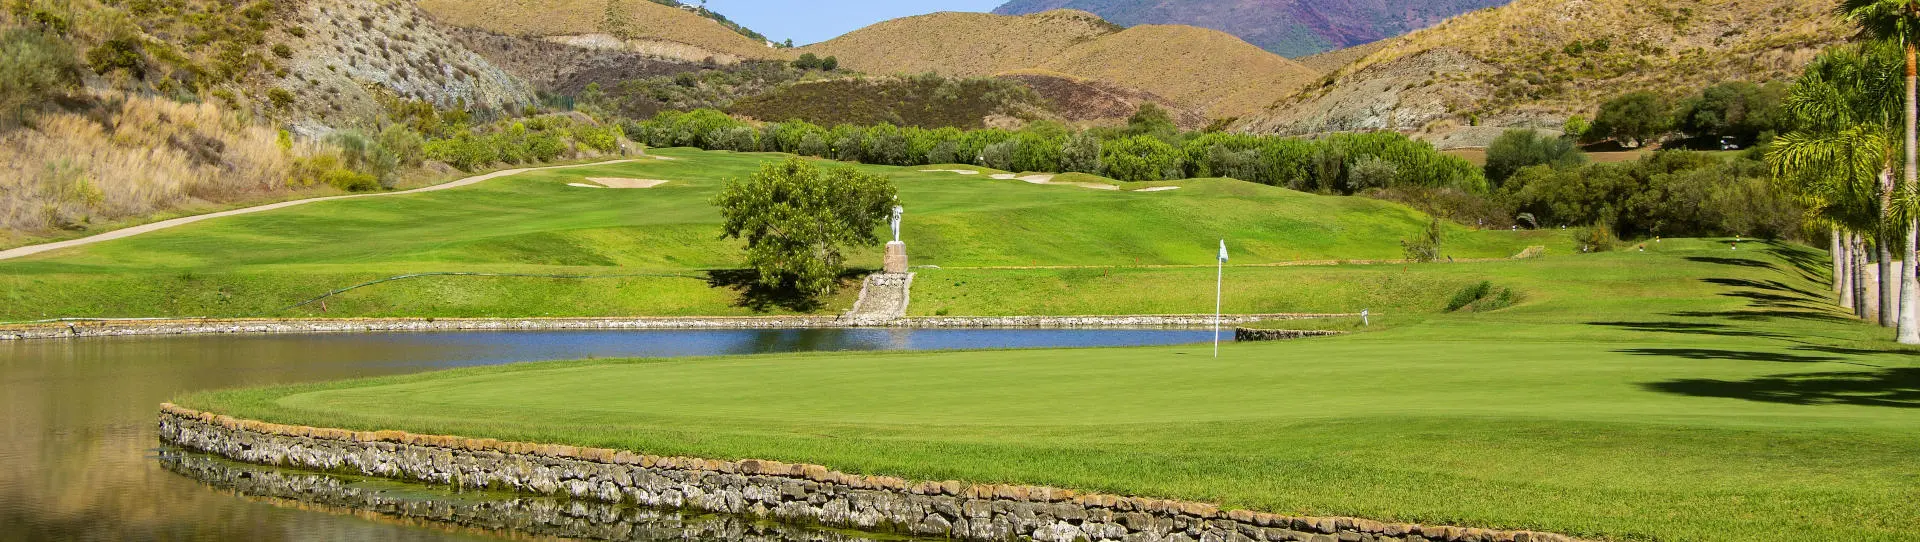 Spain Golf Driving Range - Villapadierna Golf Club - Photo 2